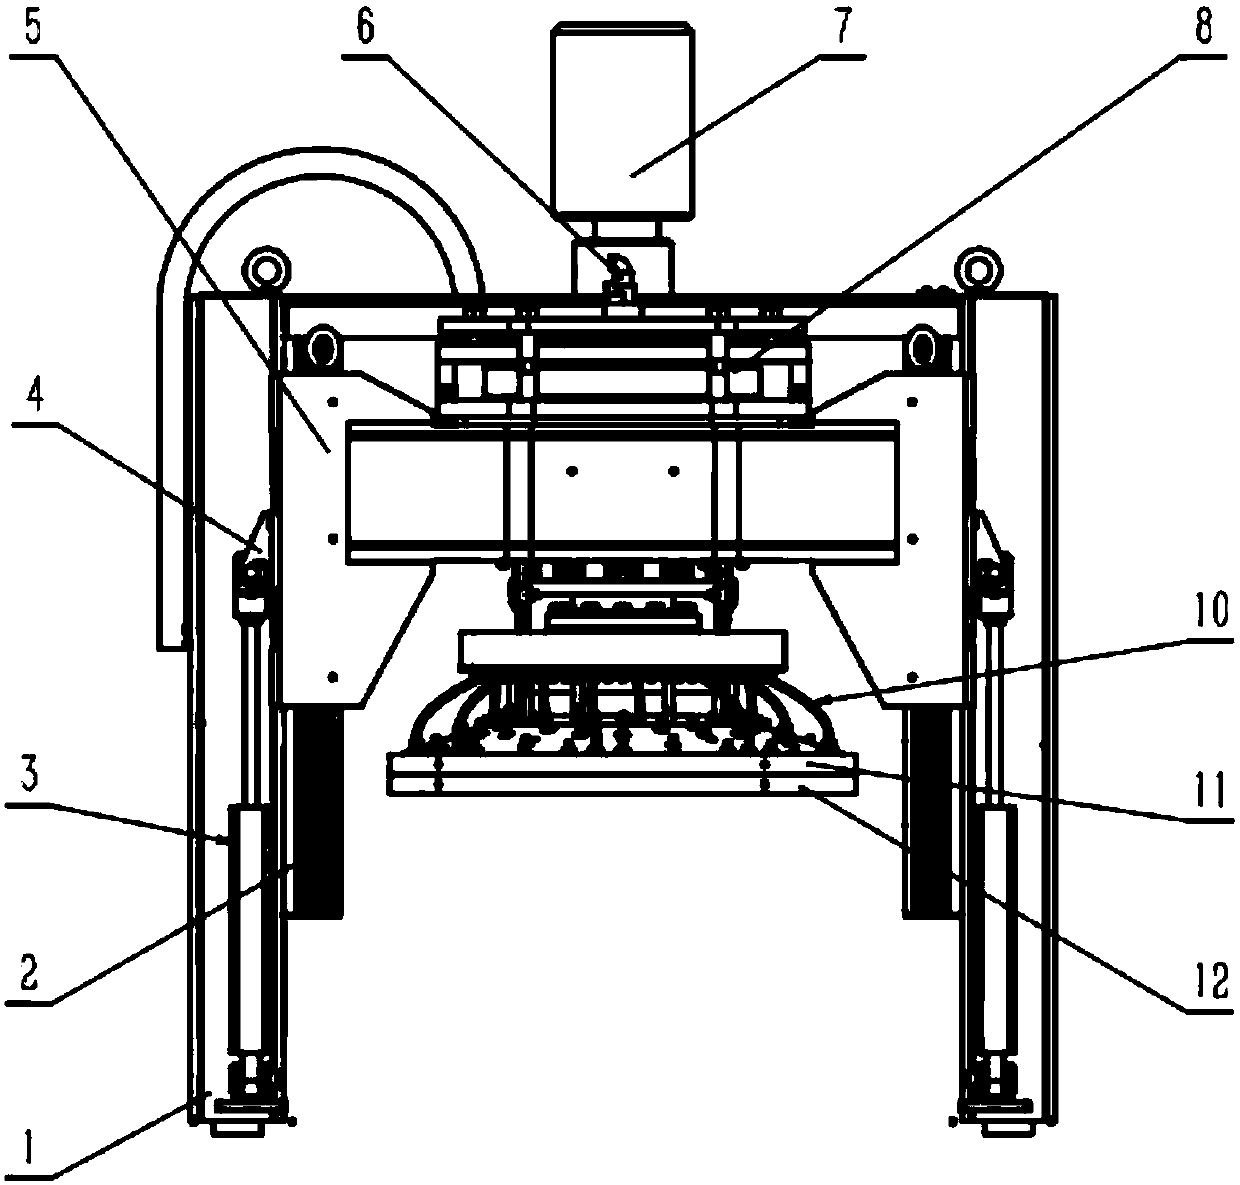 High rotating speed upper plate device for gantry type polishing machine